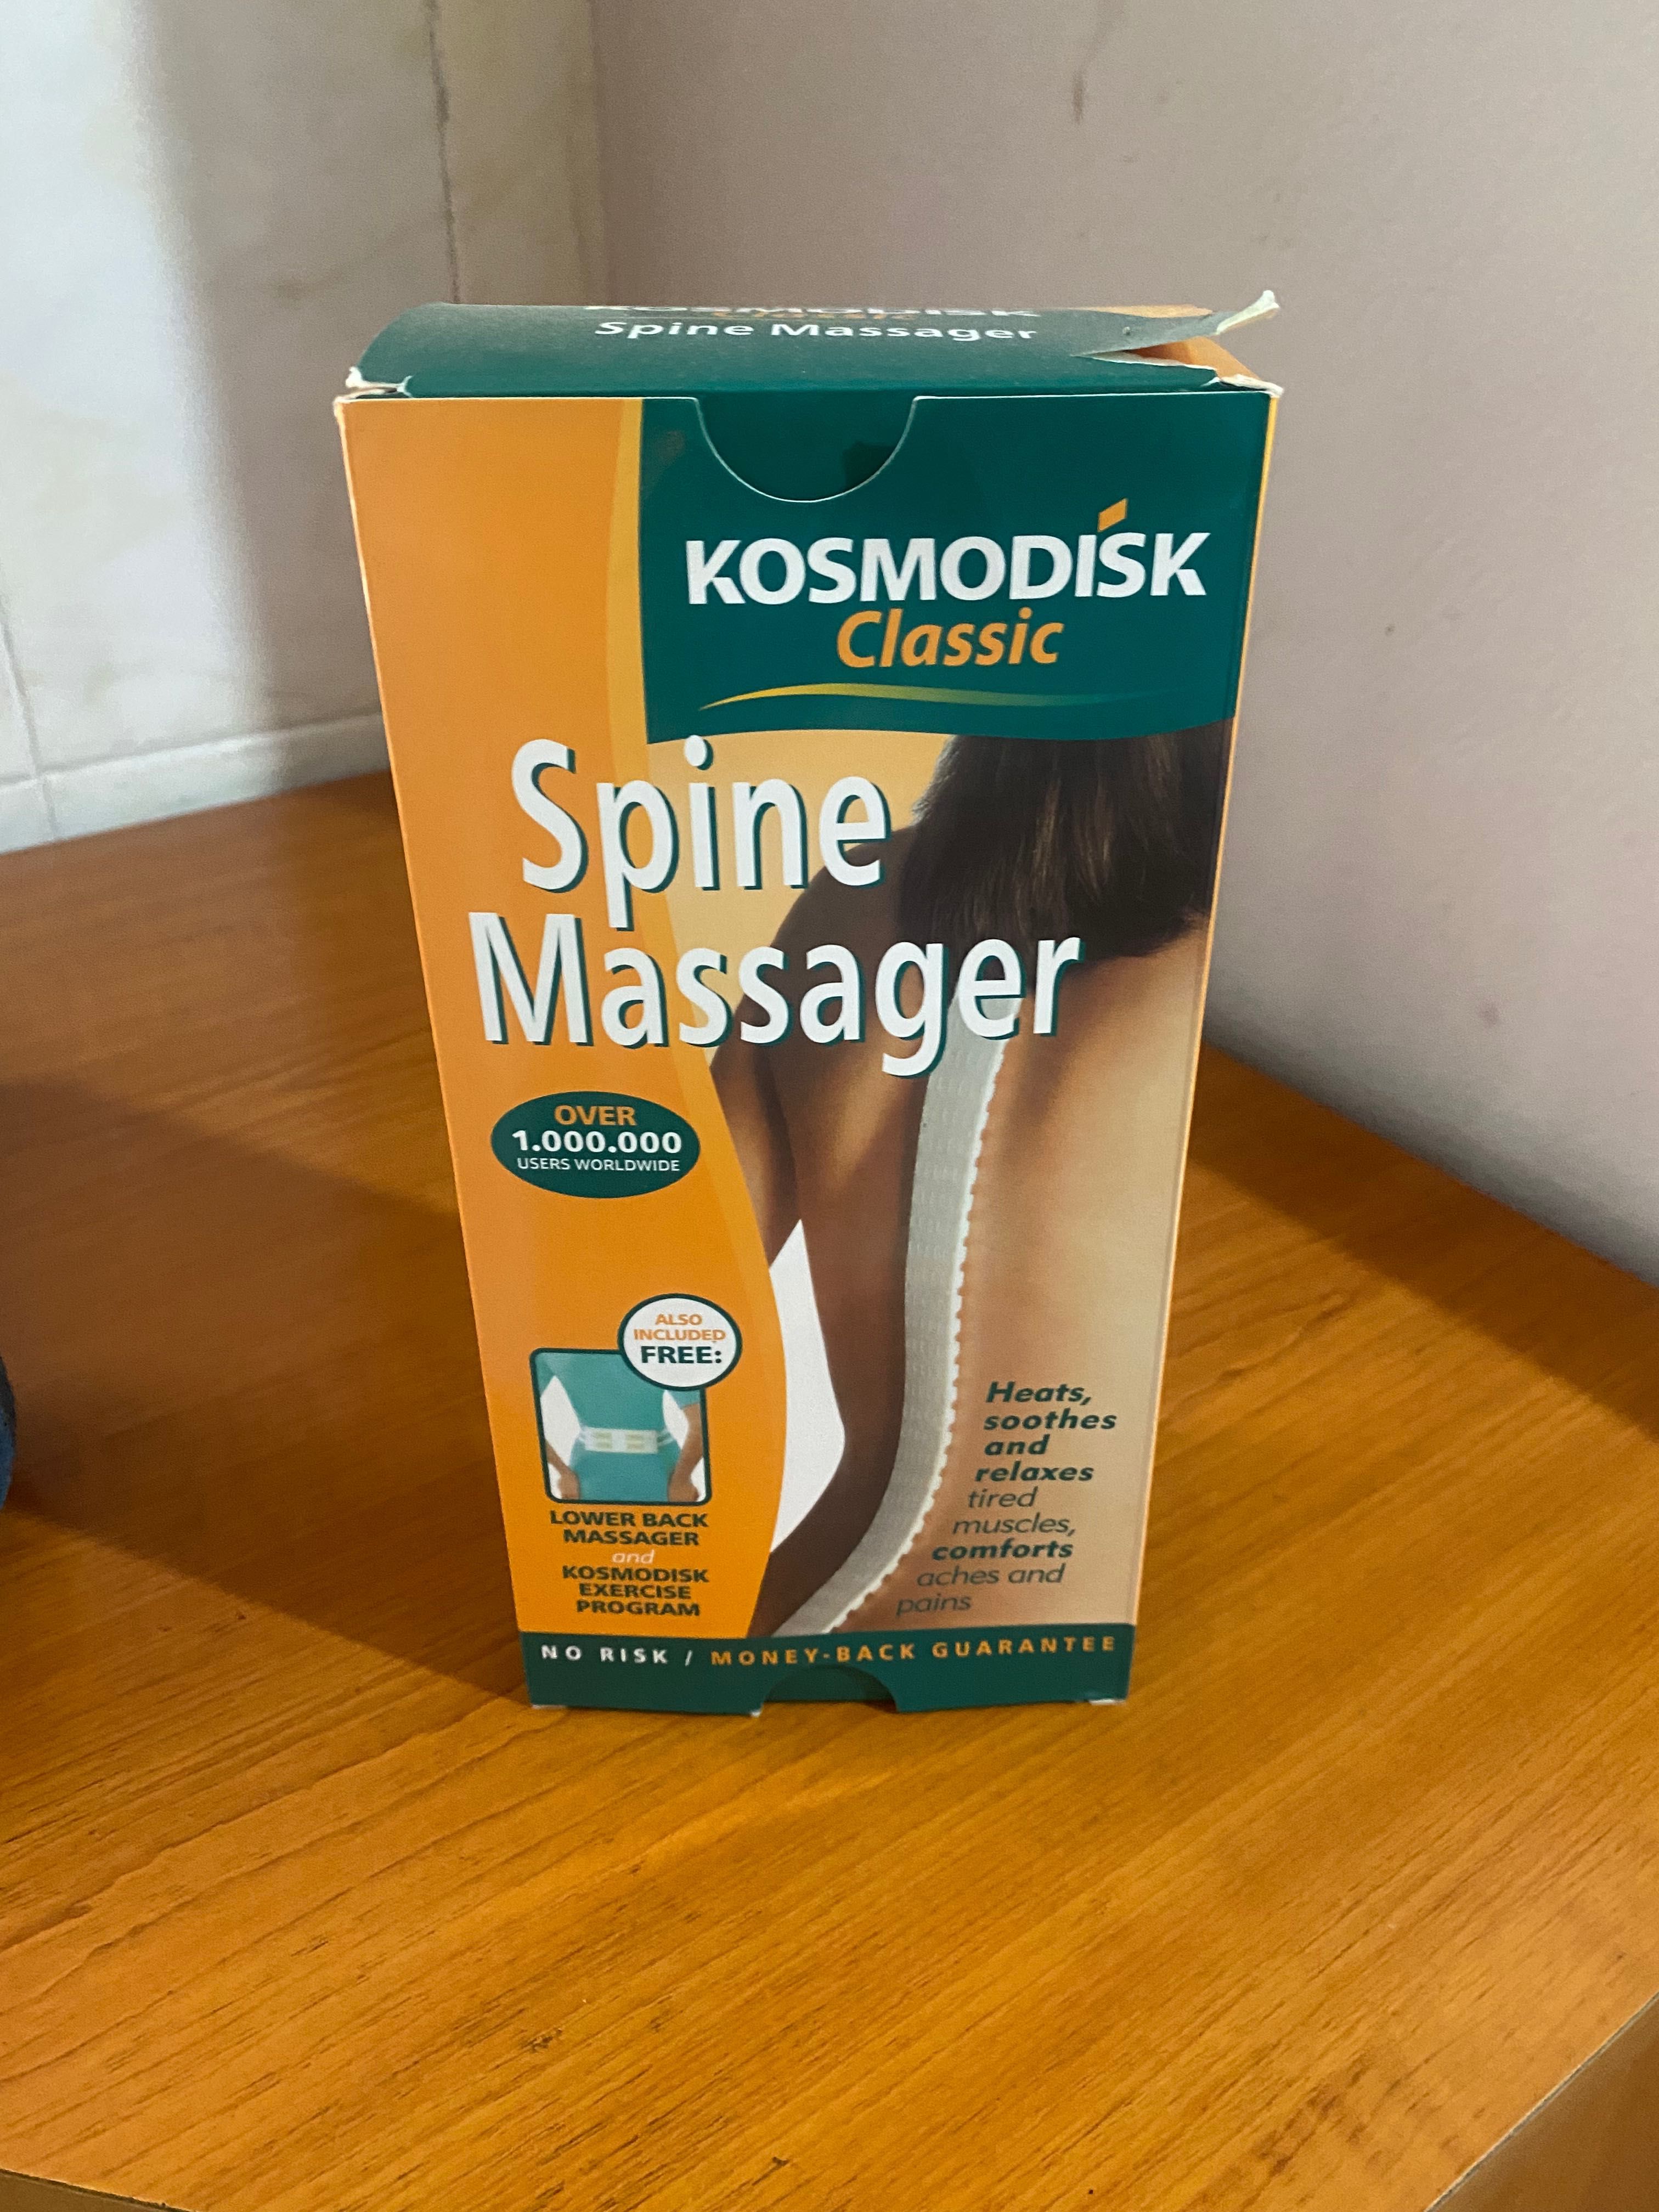 Kosmodik Spine Massager